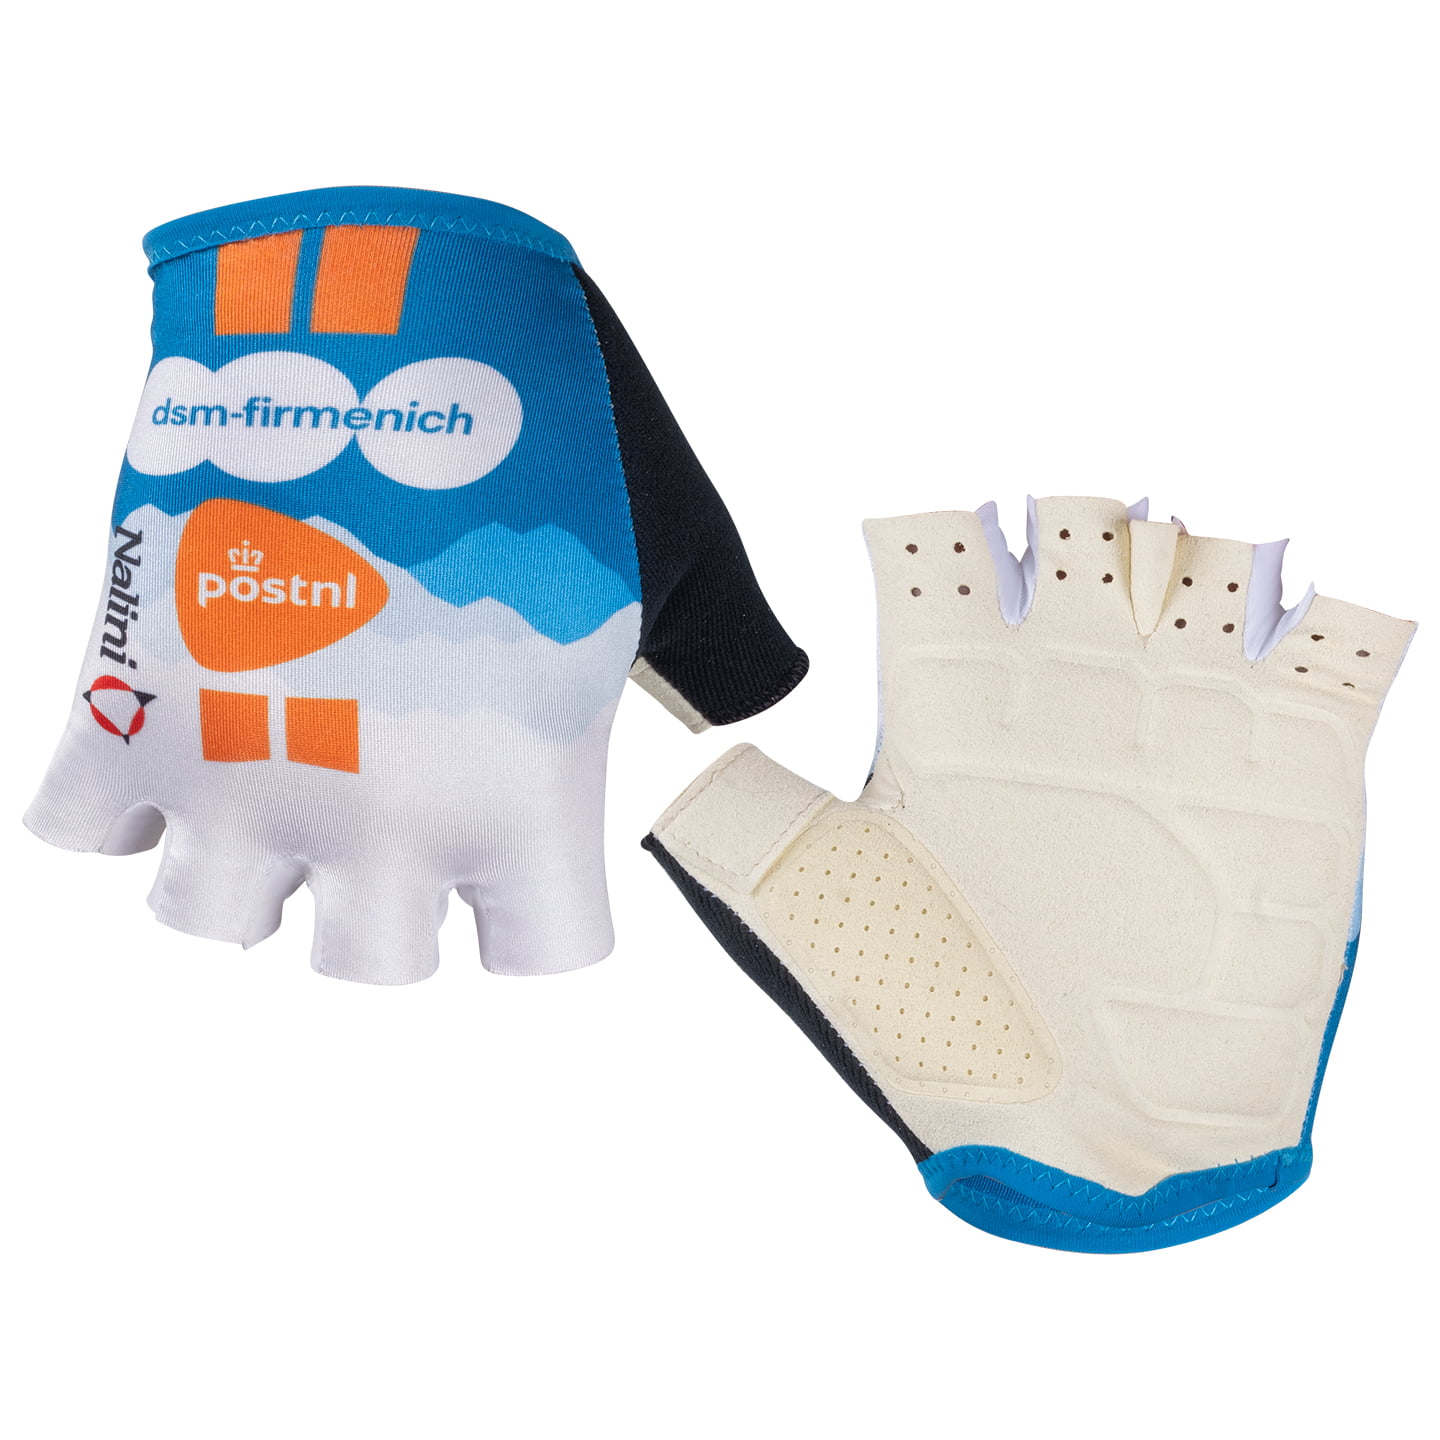 TEAM dsm-firmenich-PostNL 2024 Cycling Gloves, for men, size M, Cycling gloves, Cycling gear